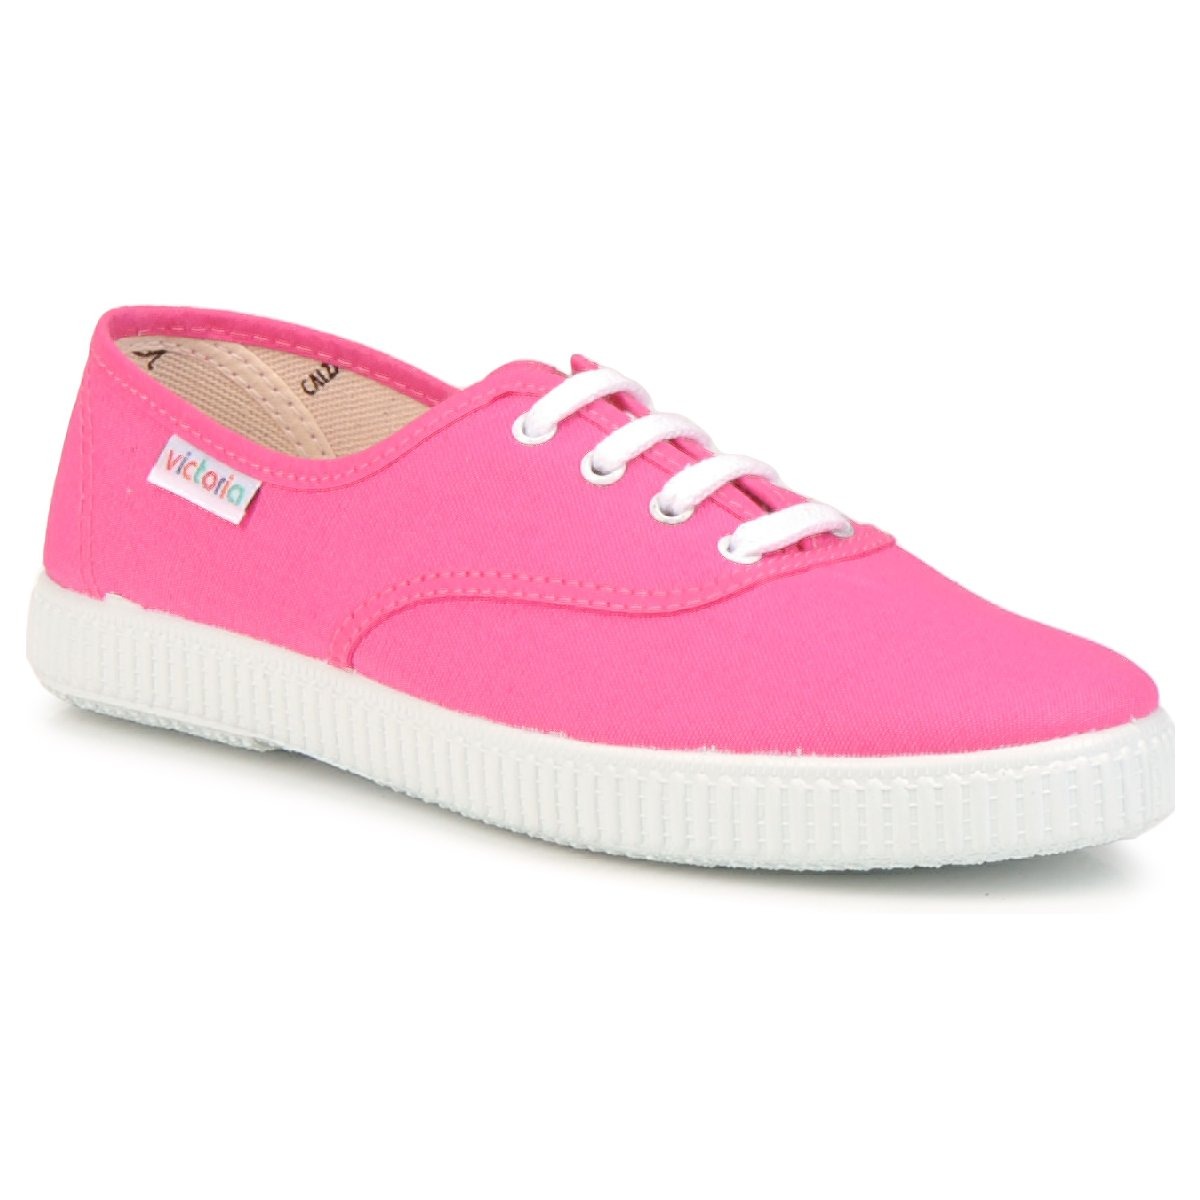 Sneakers - Pink - Victoria - Woman - Spartoo GOOFASH